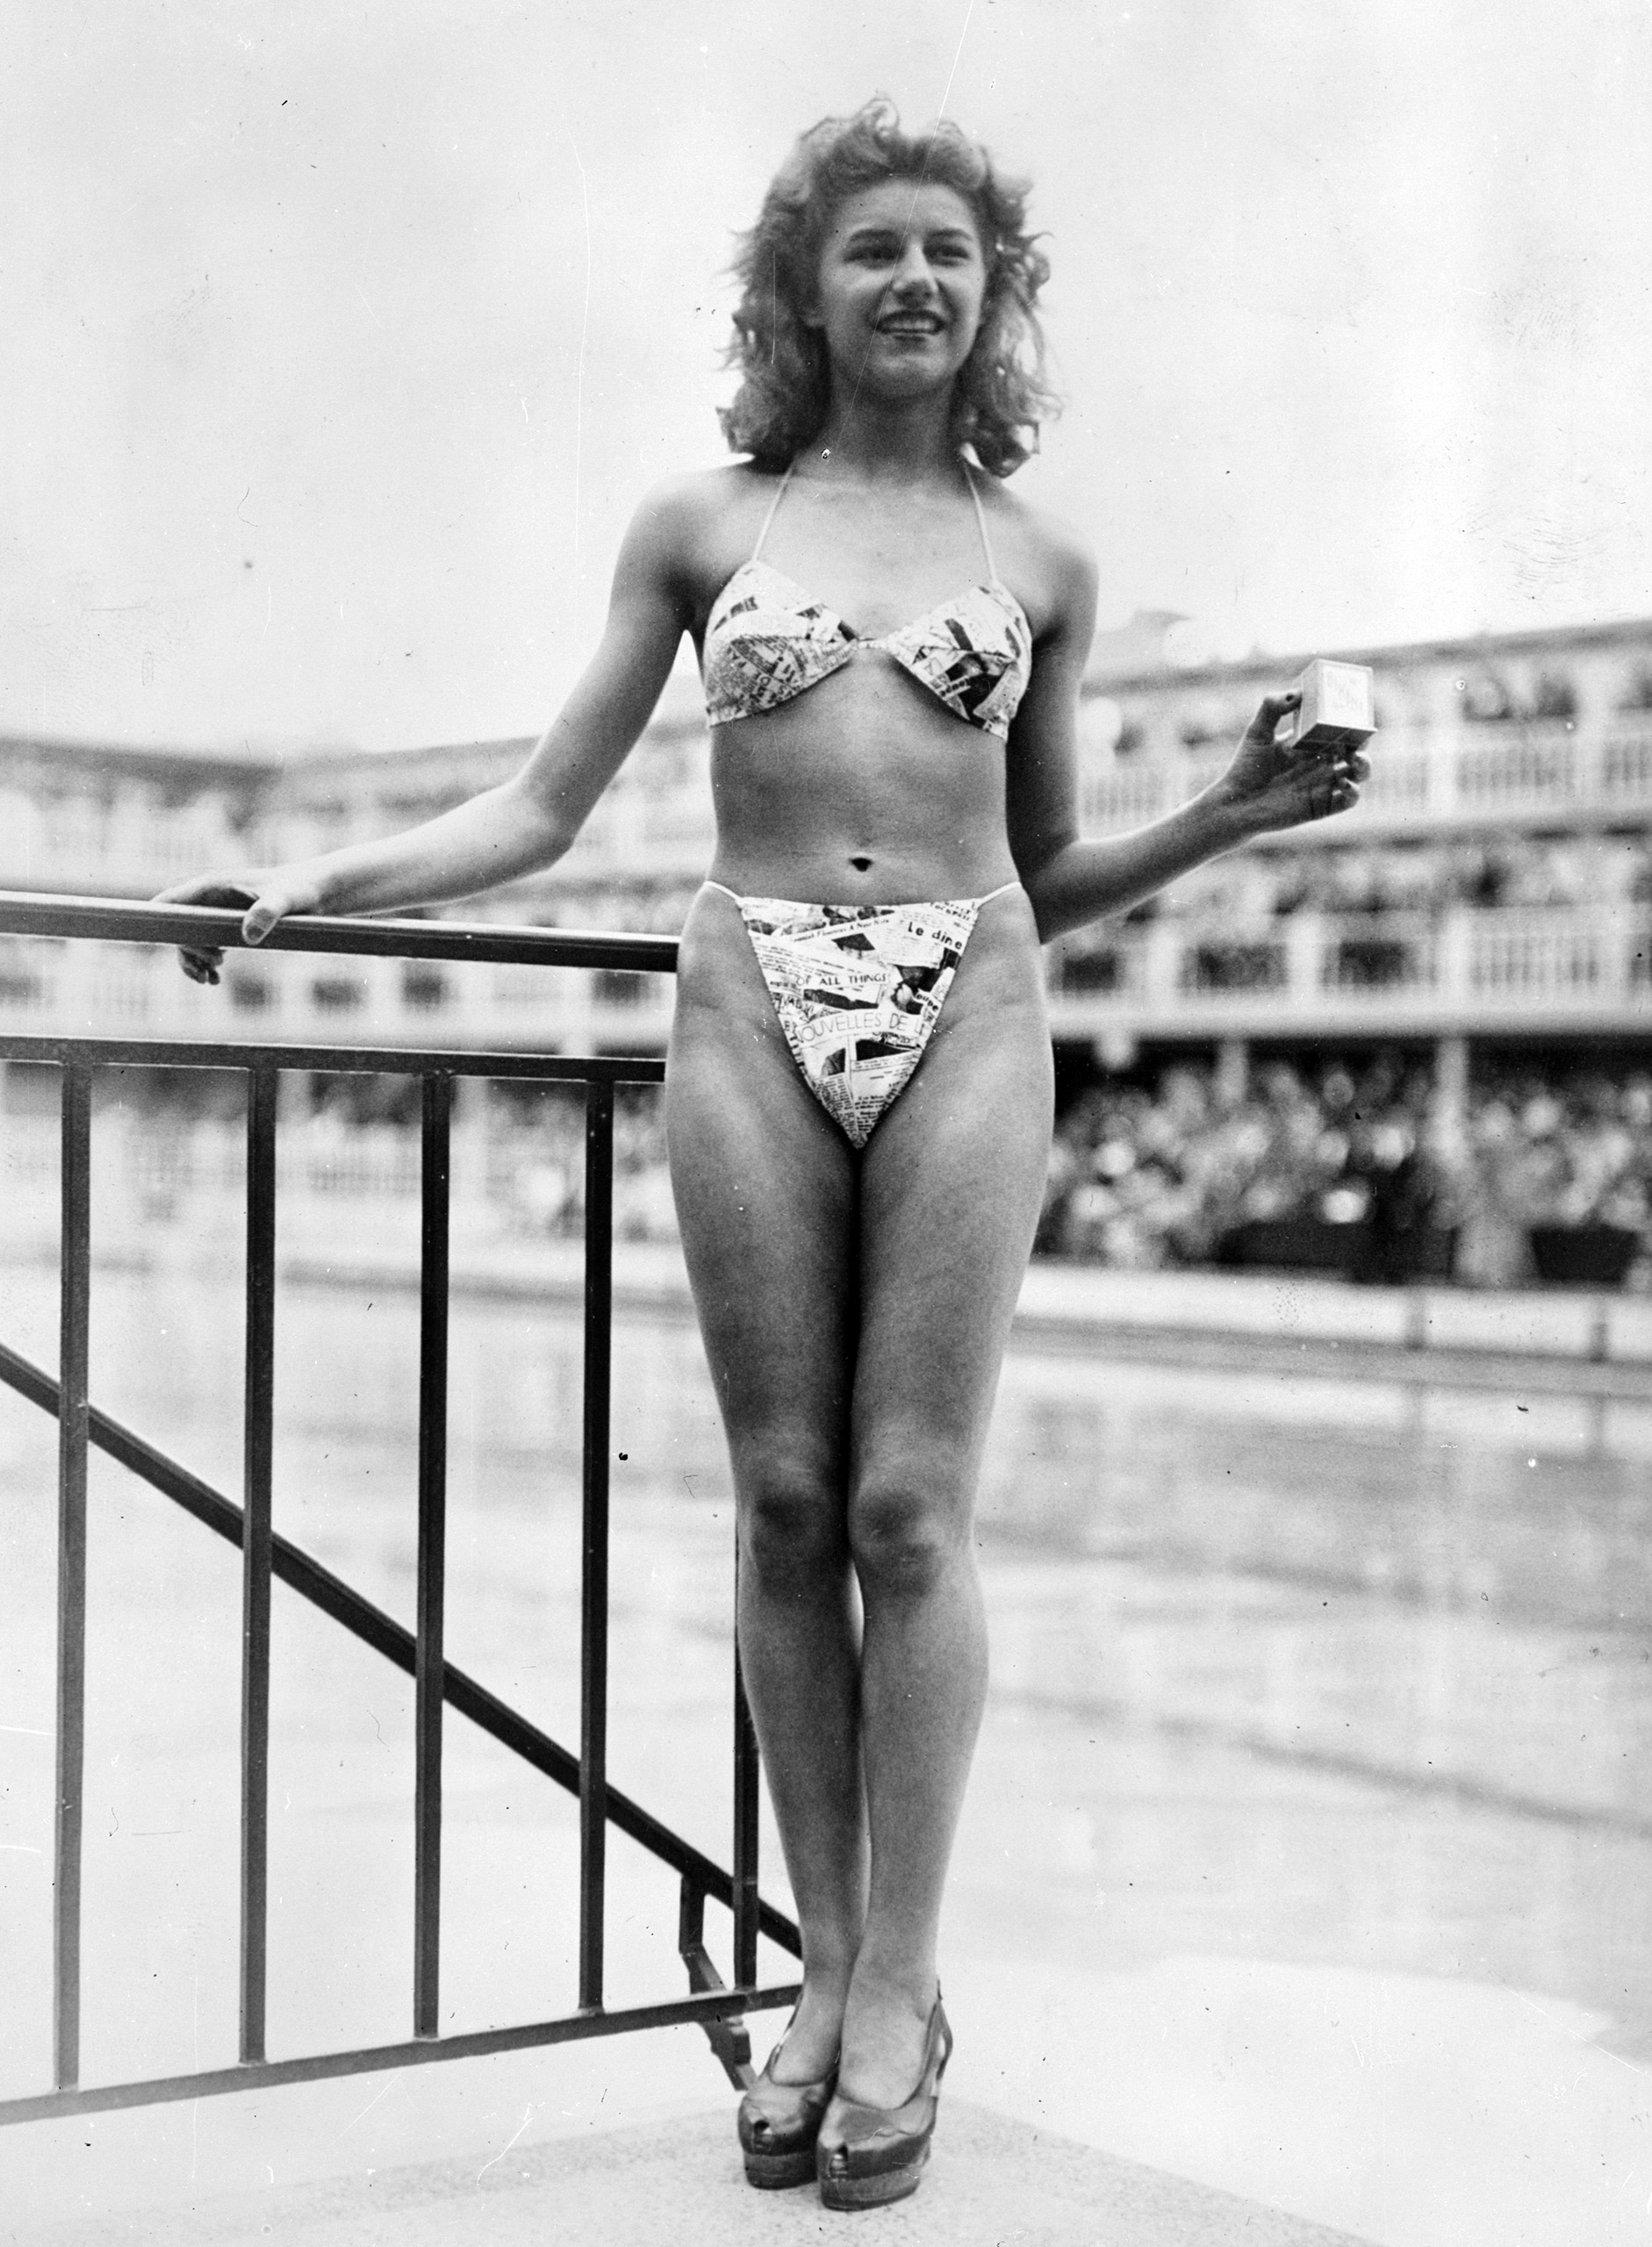 The first bikini designed by Louis Reard, 1946.